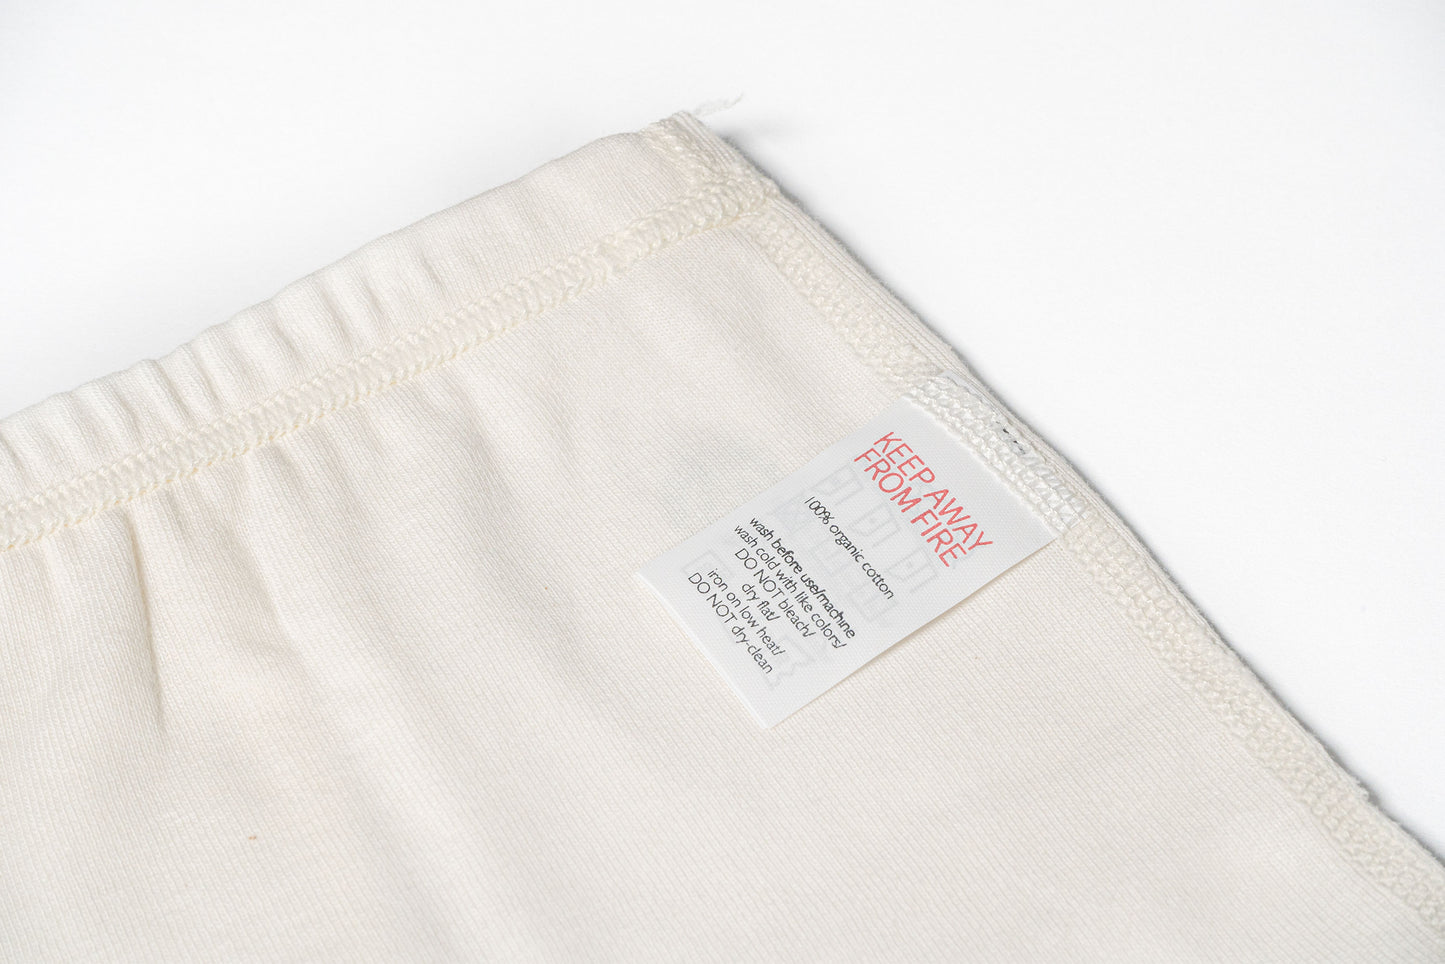 100% GOTS Certified Organic Cotton Boxer Shorts